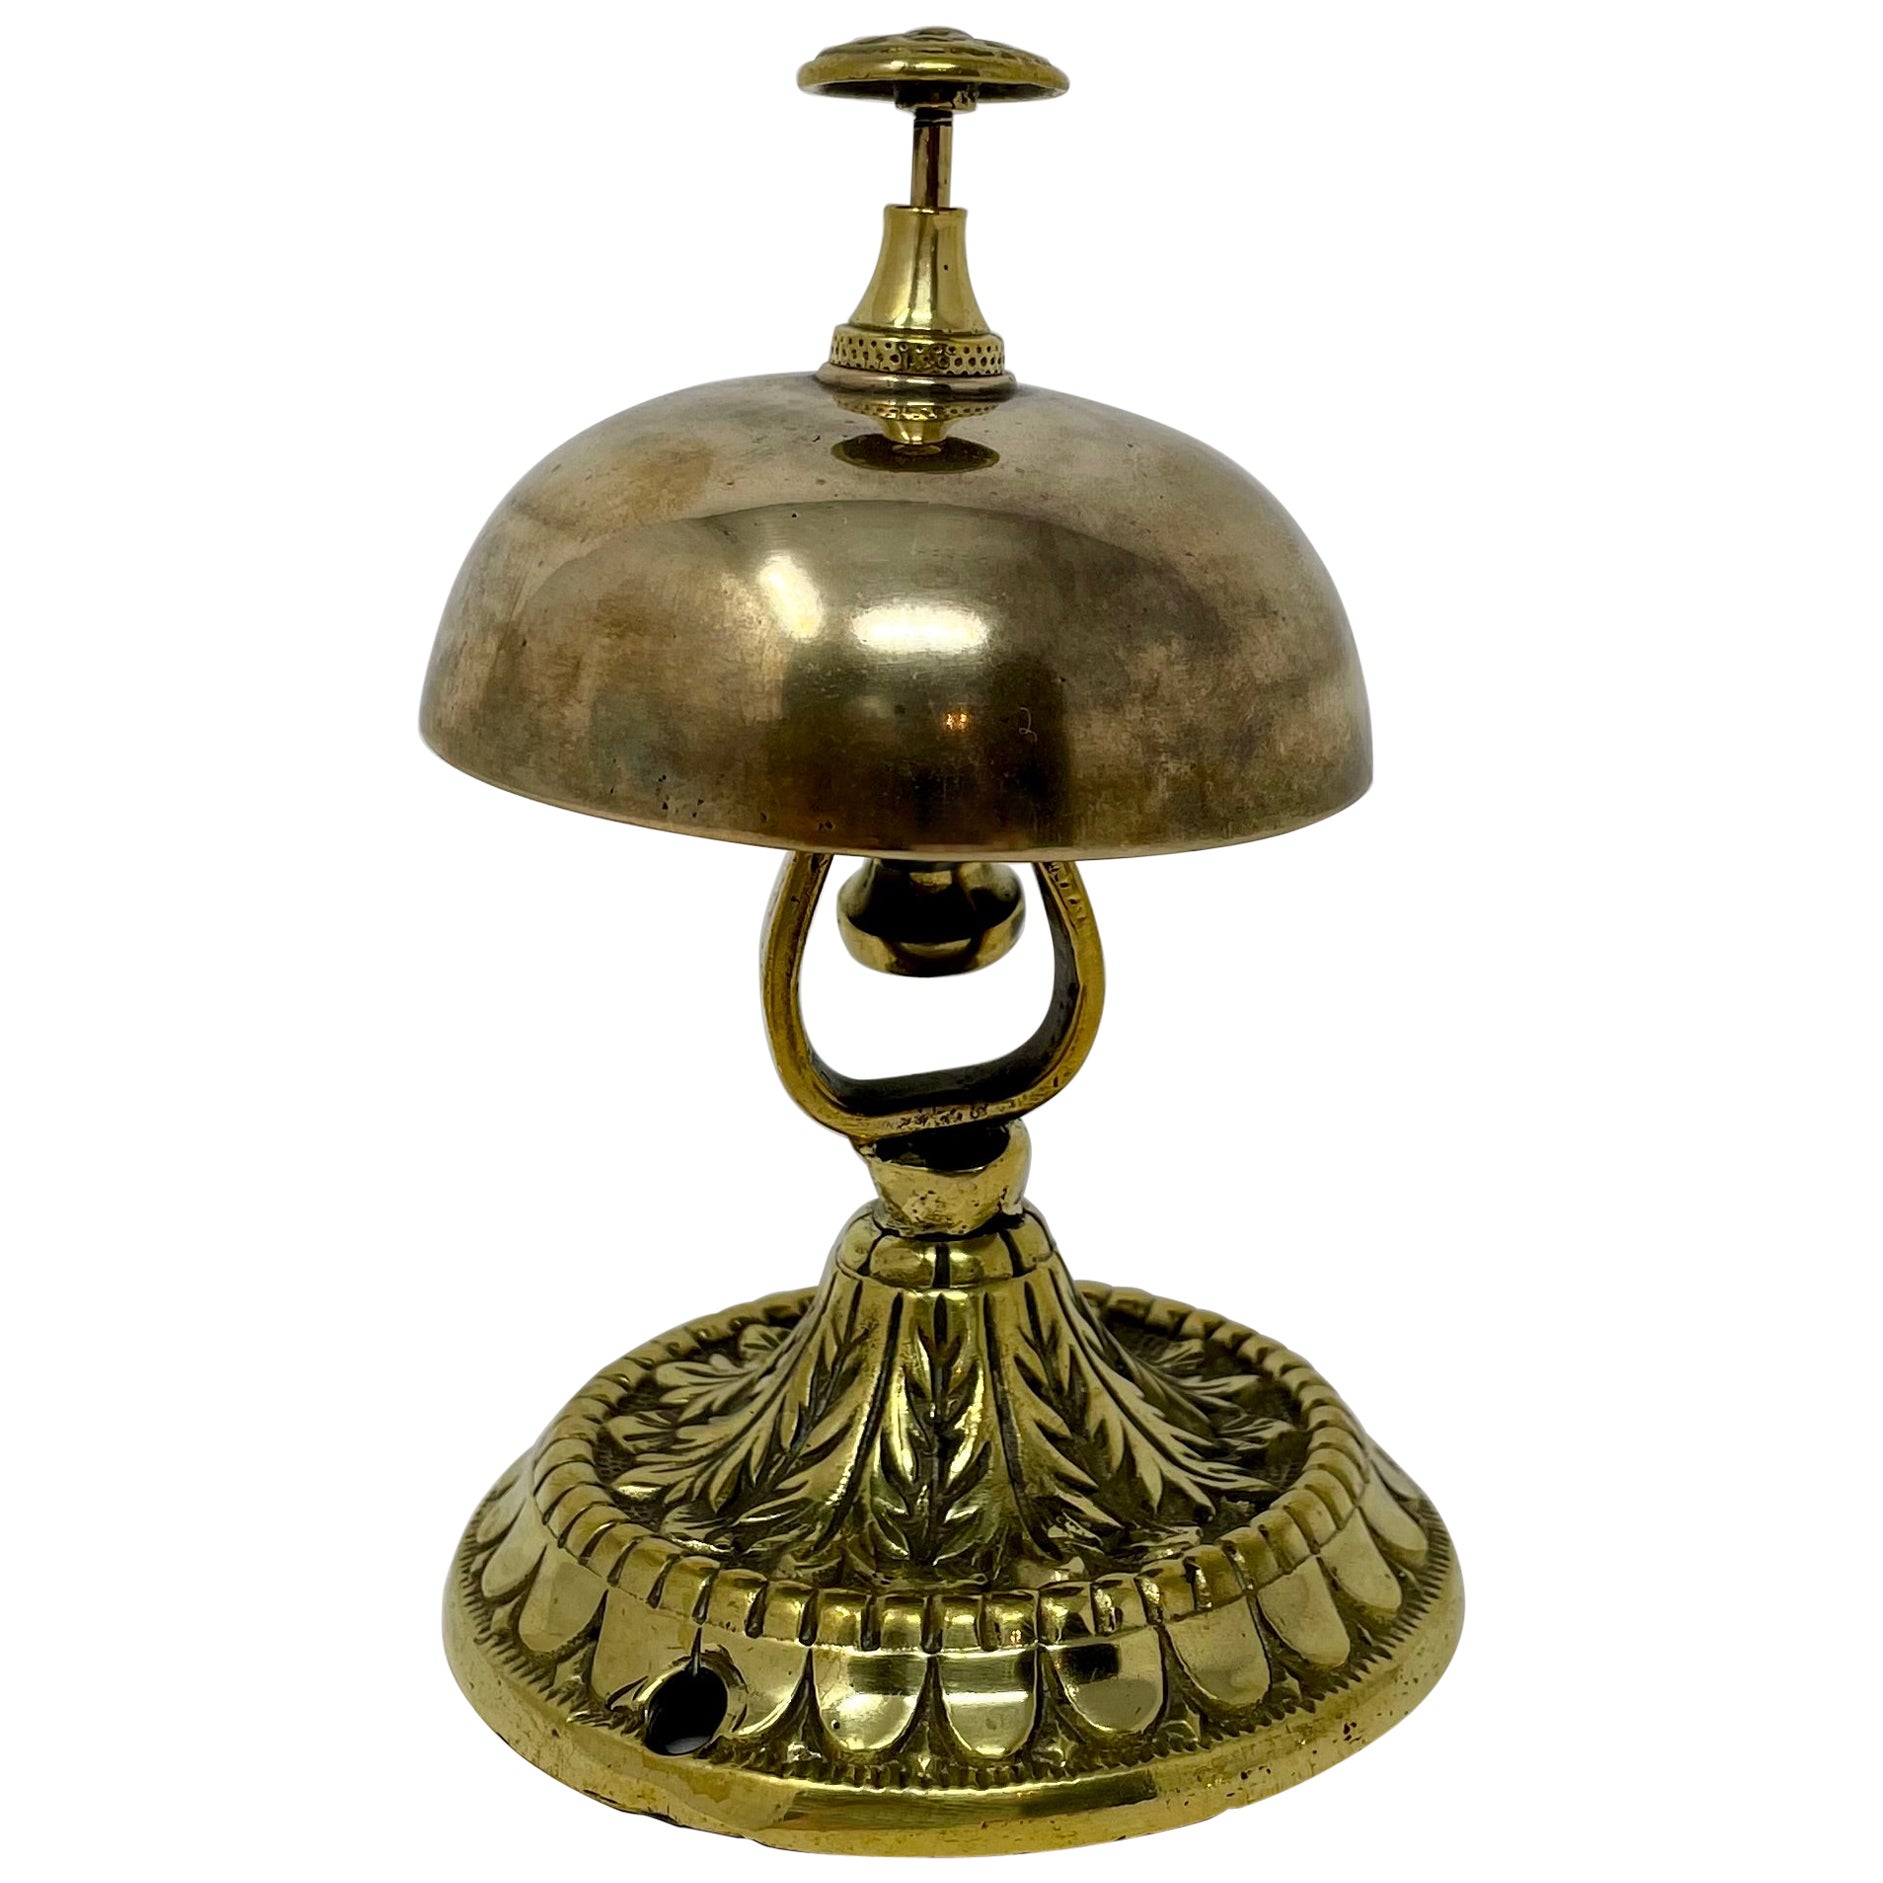 Antique English Victorian Brass Desk Bell, Circa 1880's.